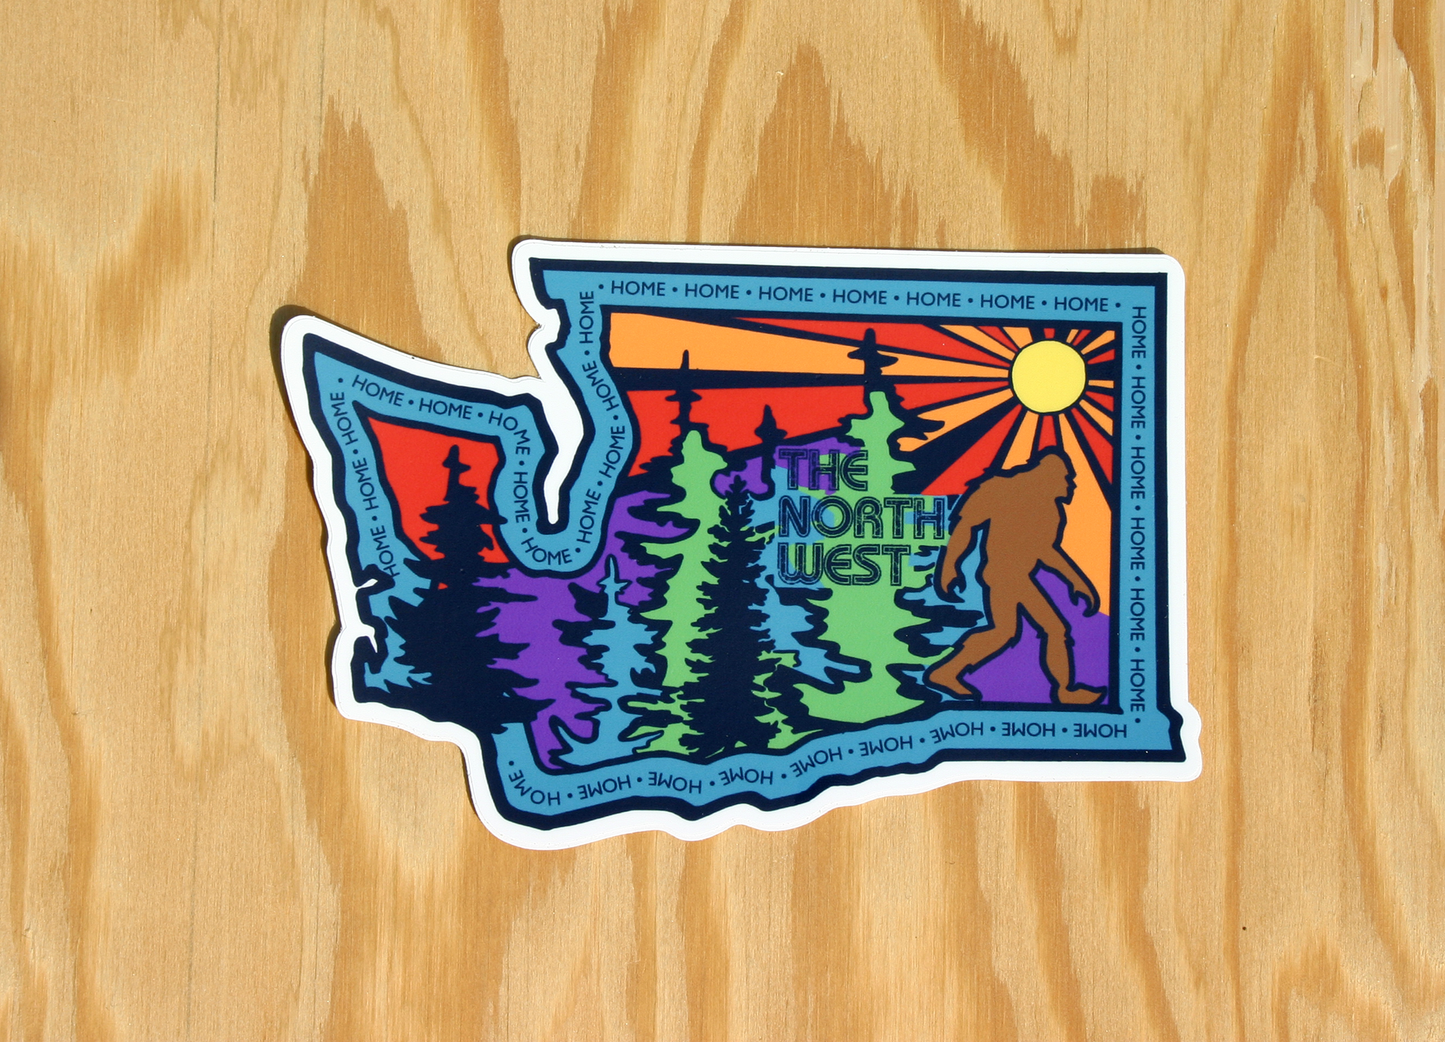 The North West, Washington State